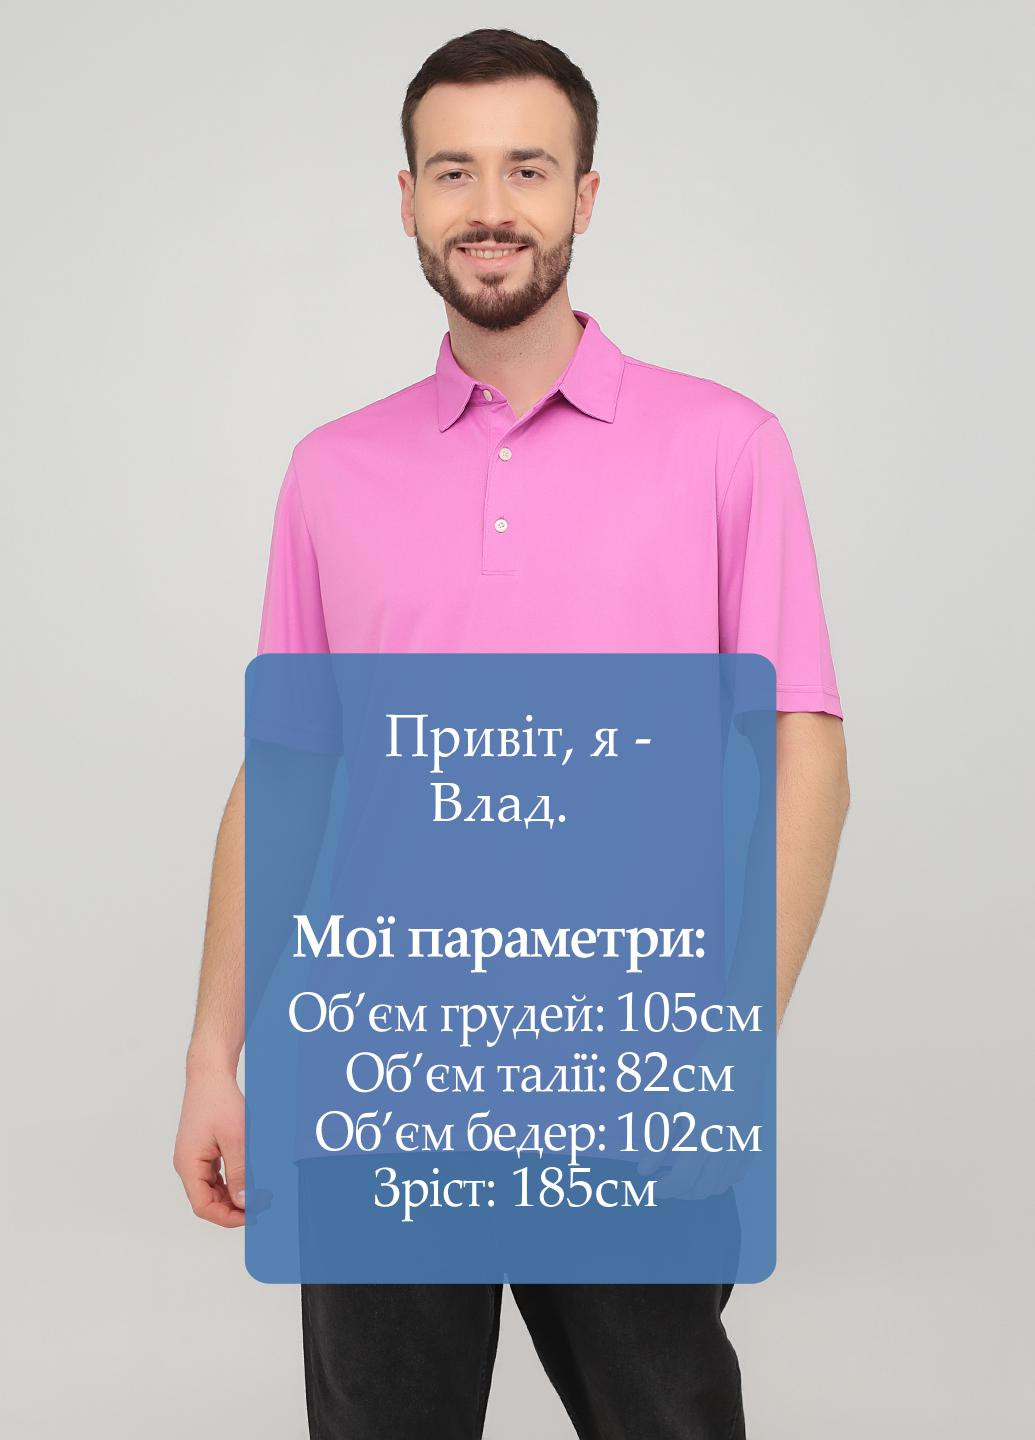 Розово-лиловая футболка-поло для мужчин Greg Norman однотонная